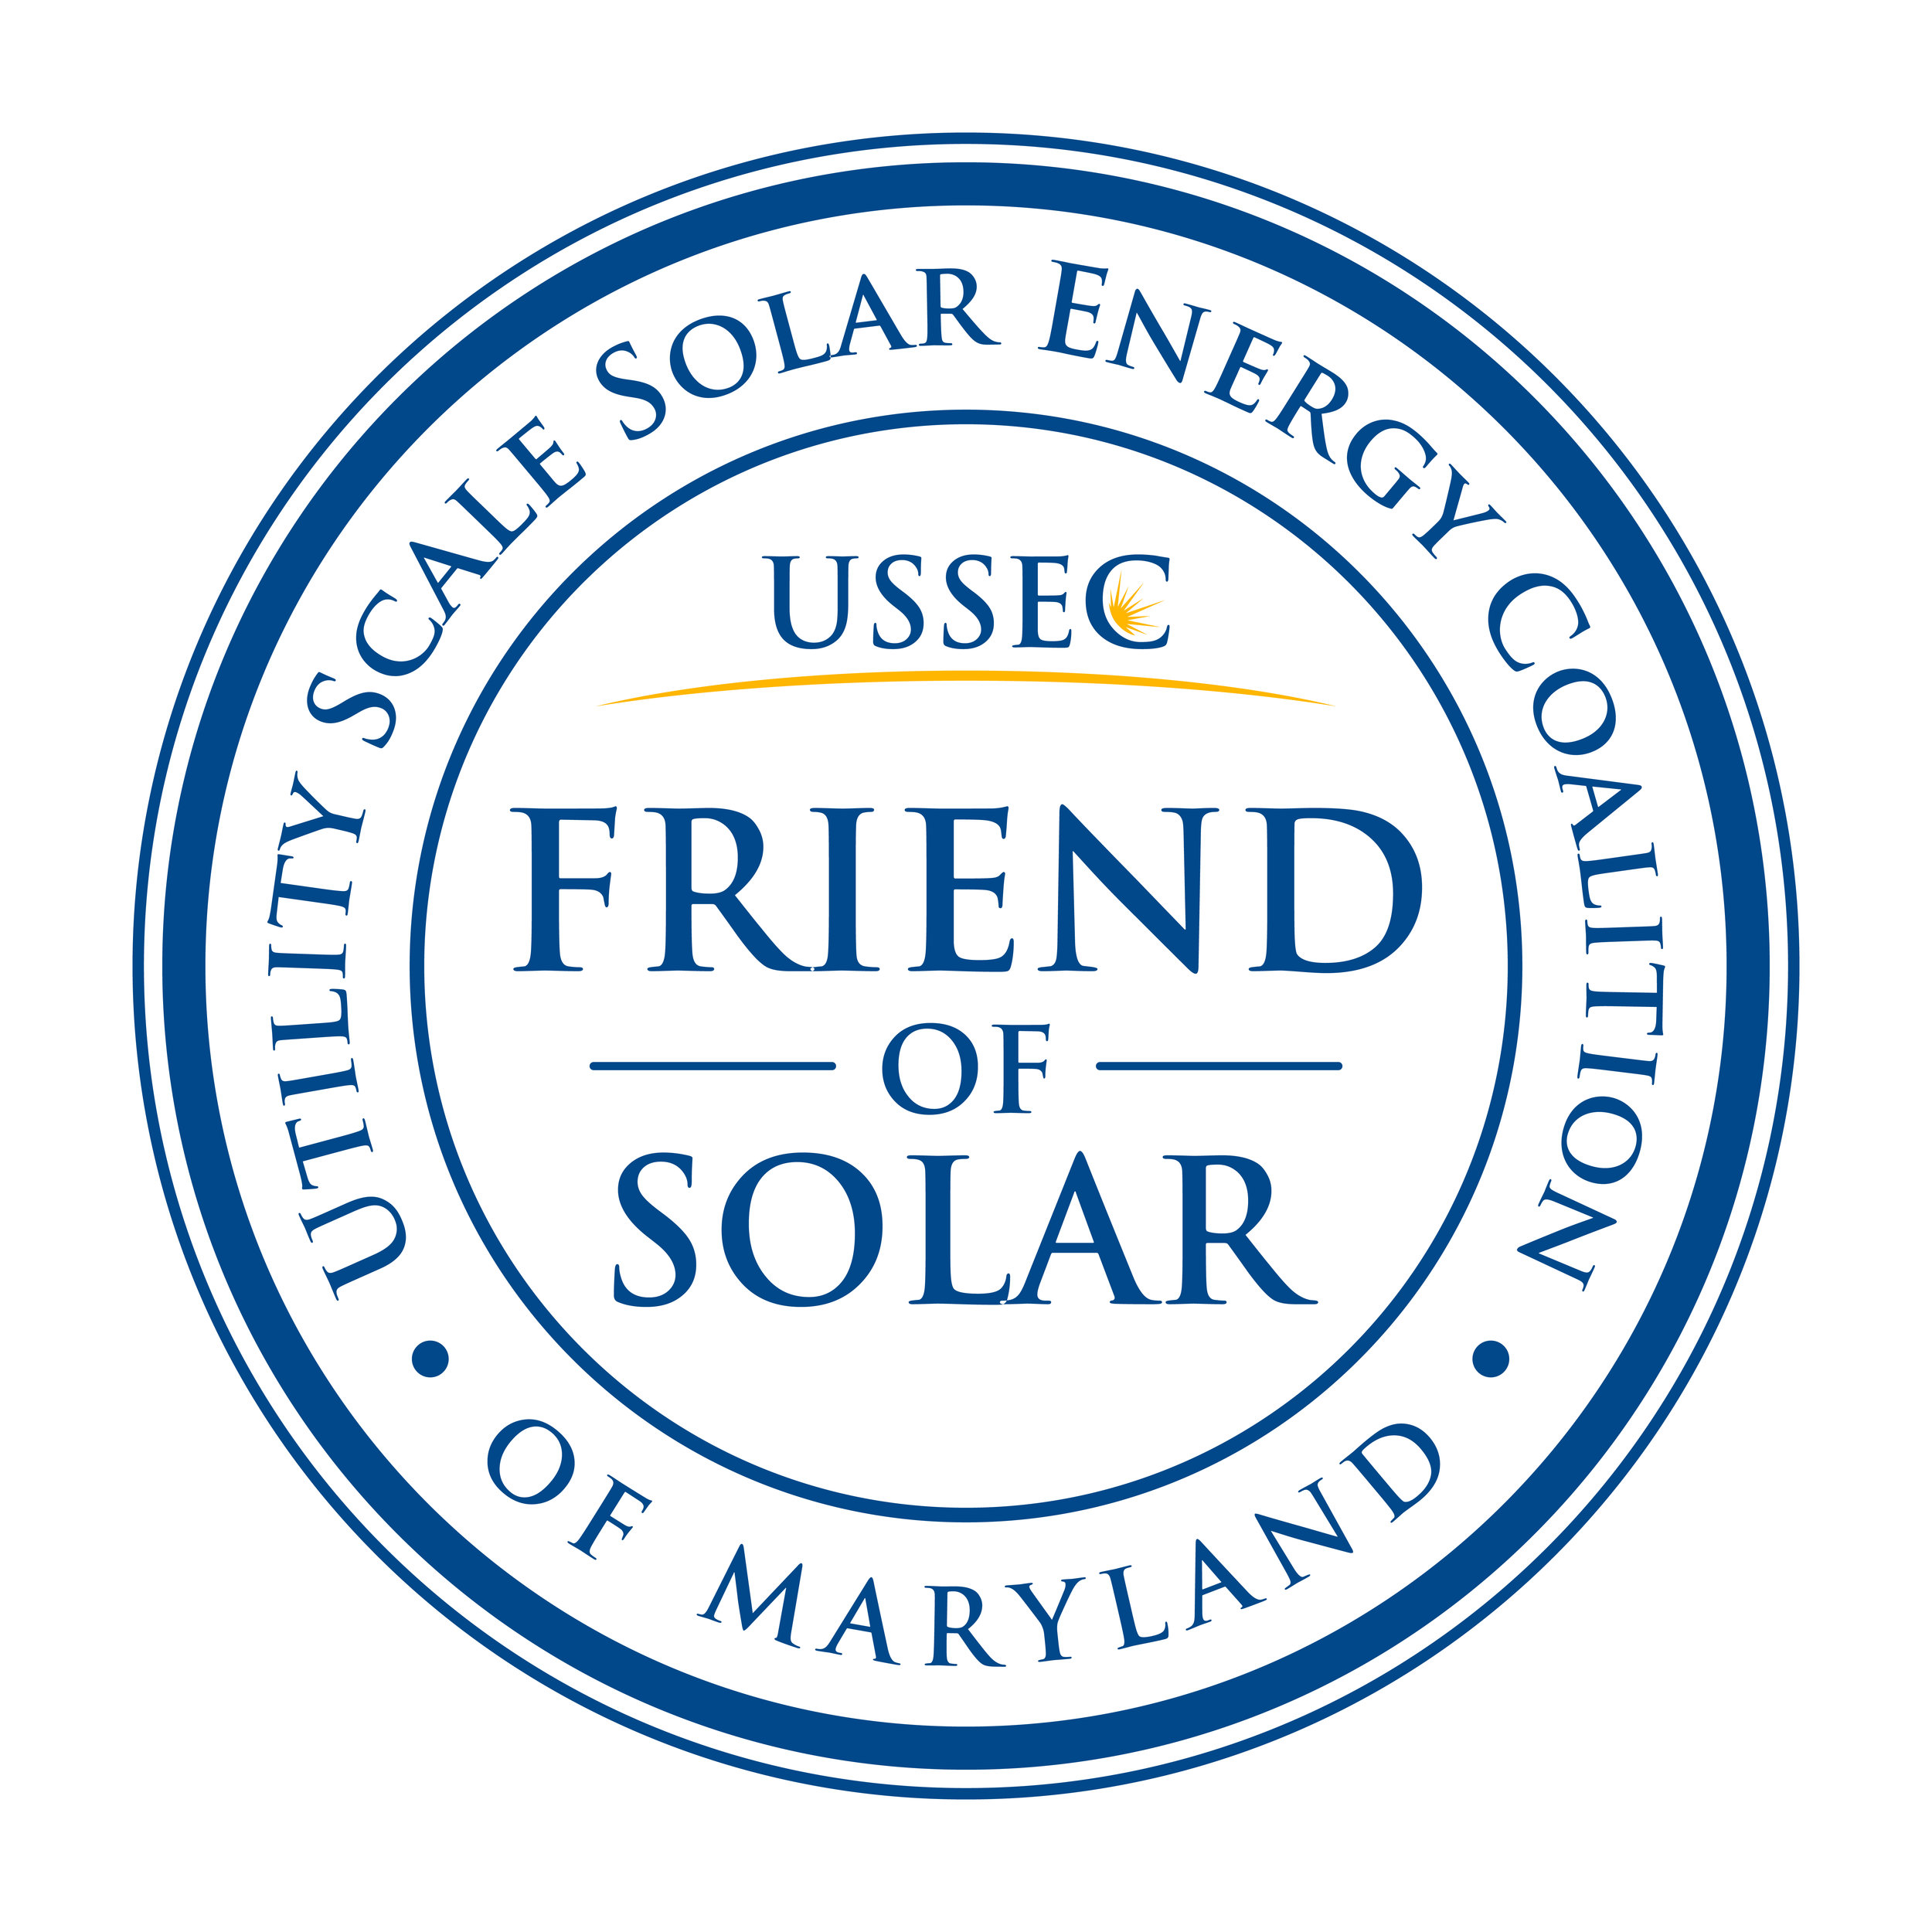 USSEC Friend of Solar